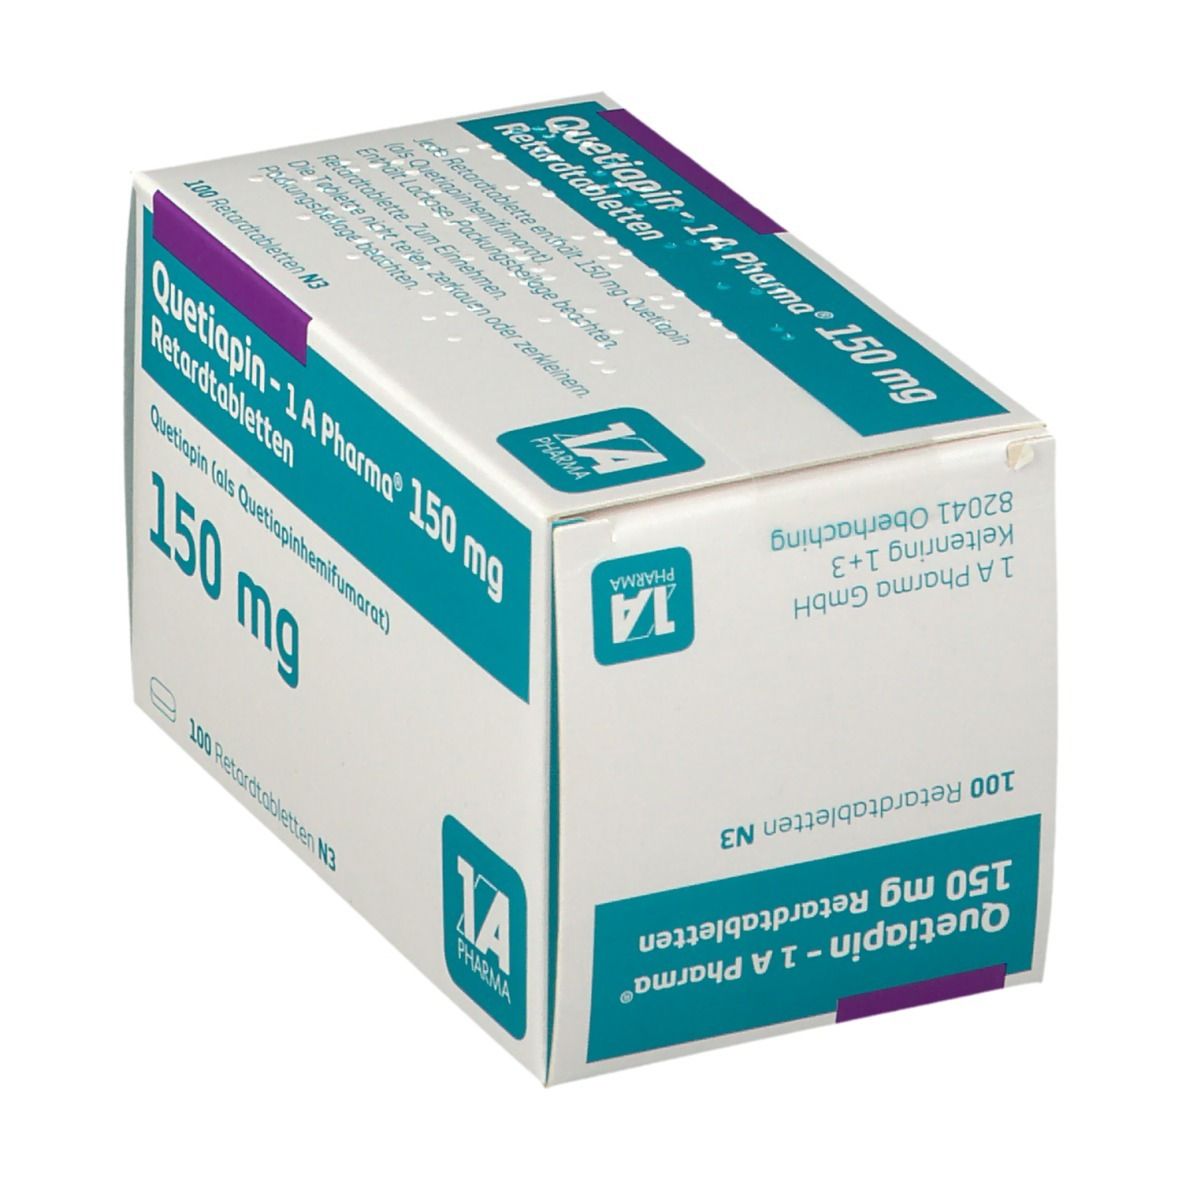 Quetiapin 1A Pharma® 150Mg